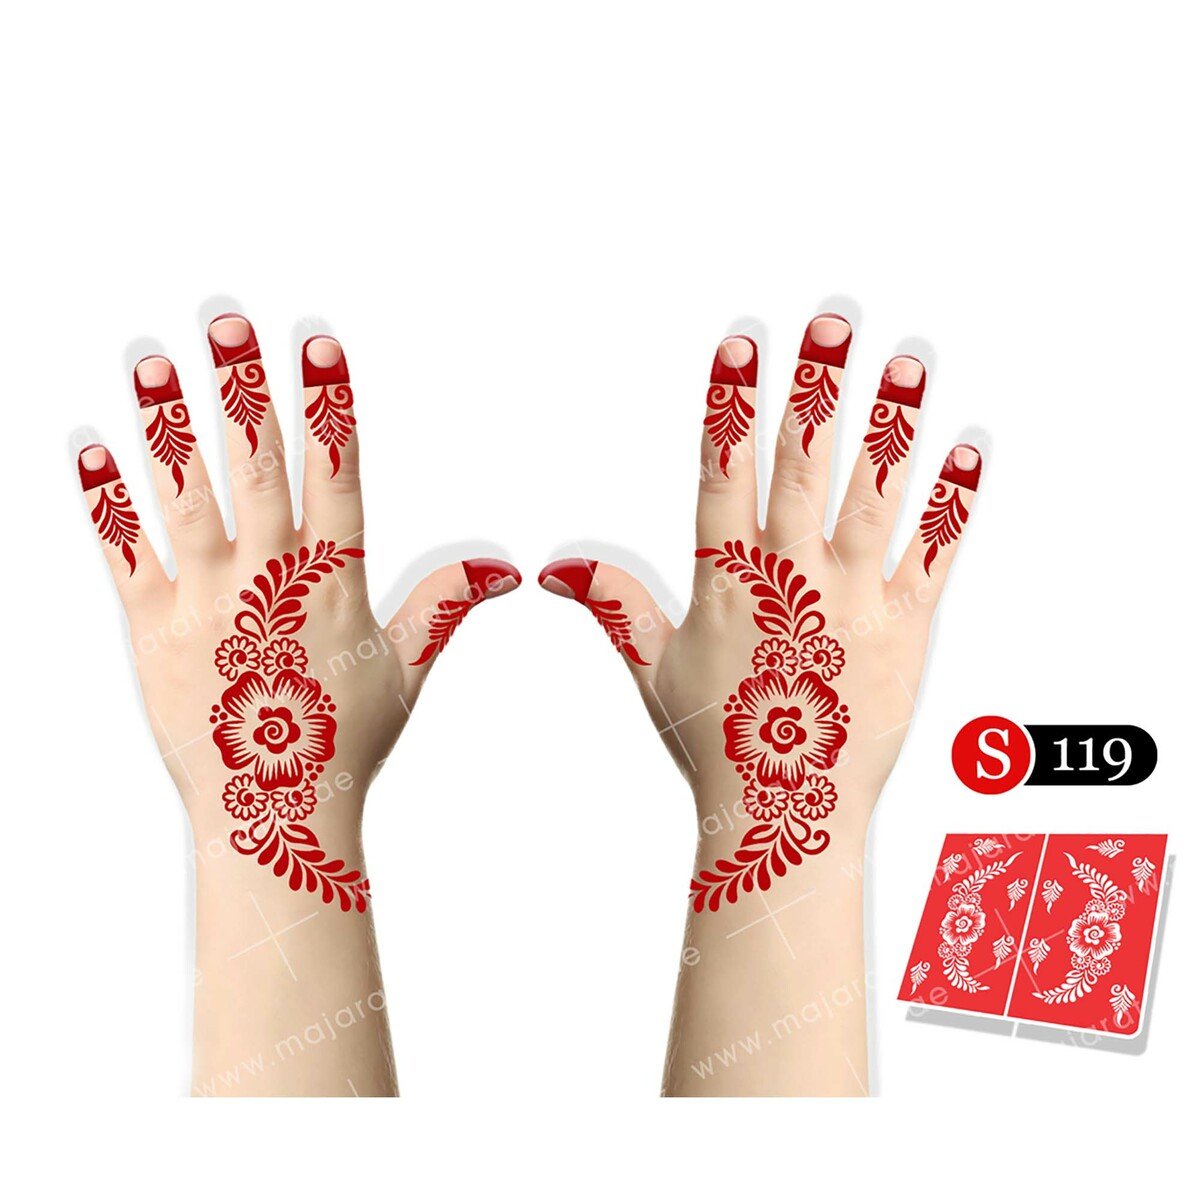 Majarat Henna Design Sticker Small S119 18x15cm